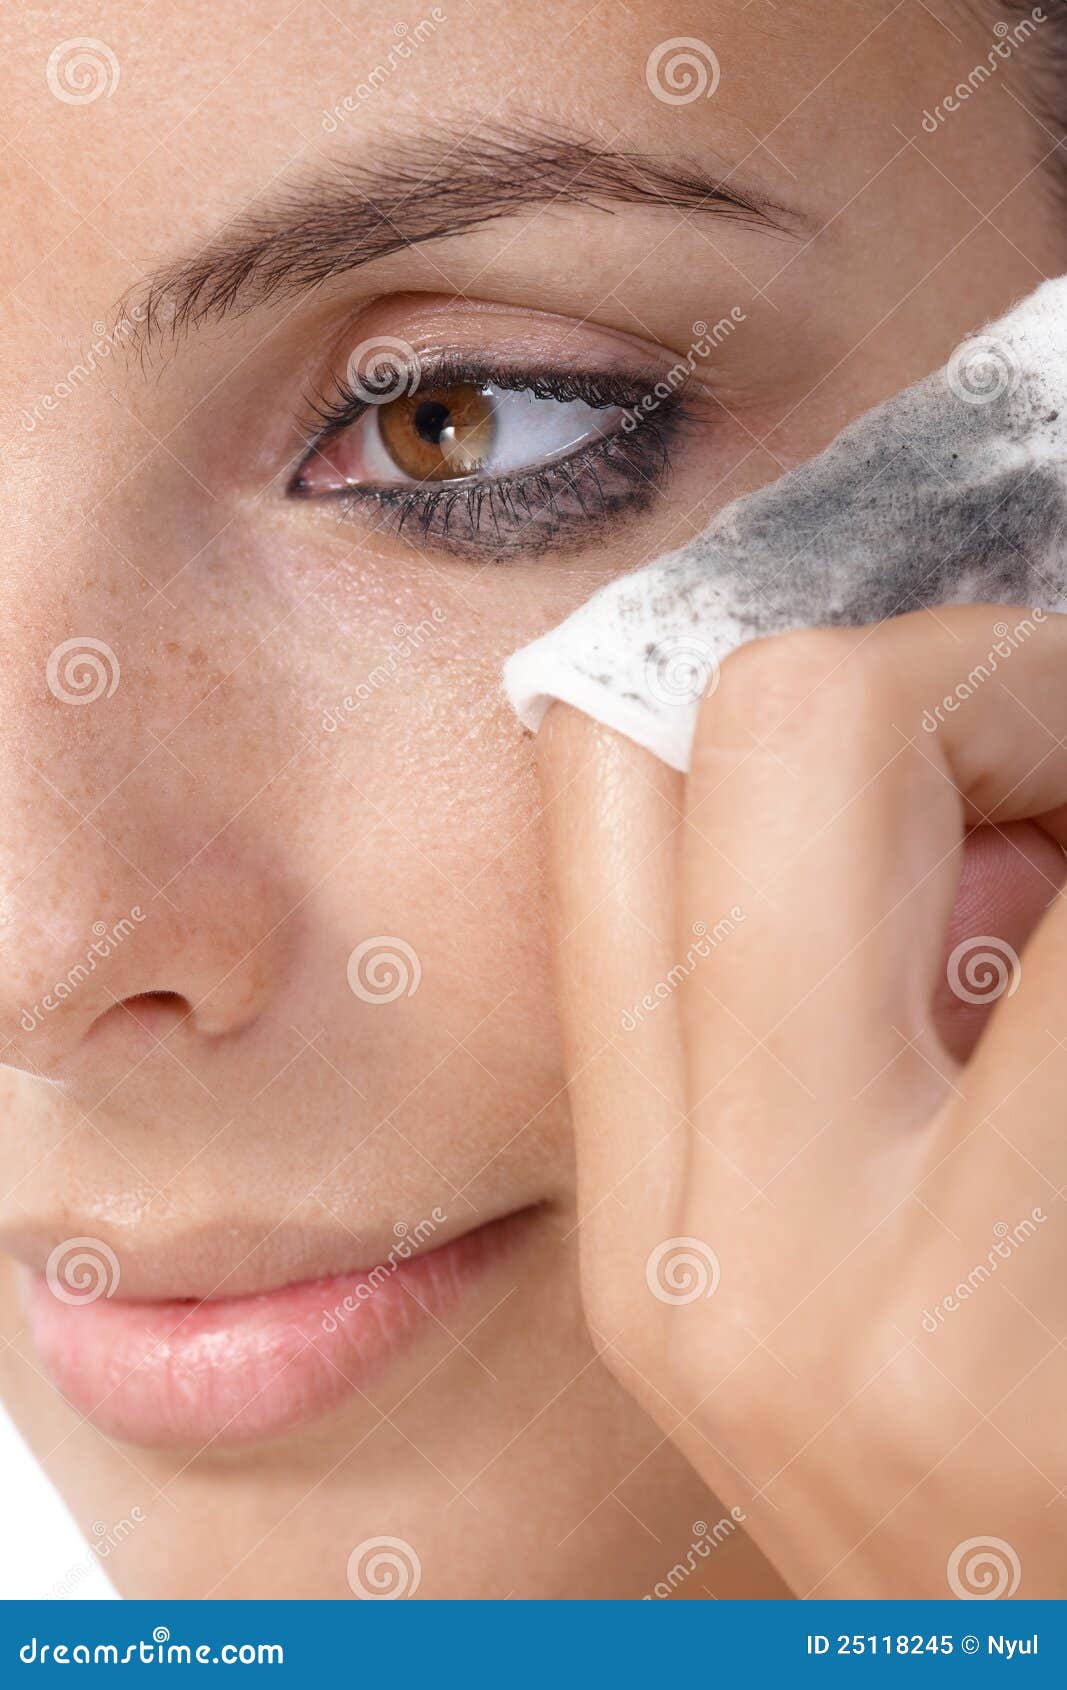 closeup photo of removing eye makeup